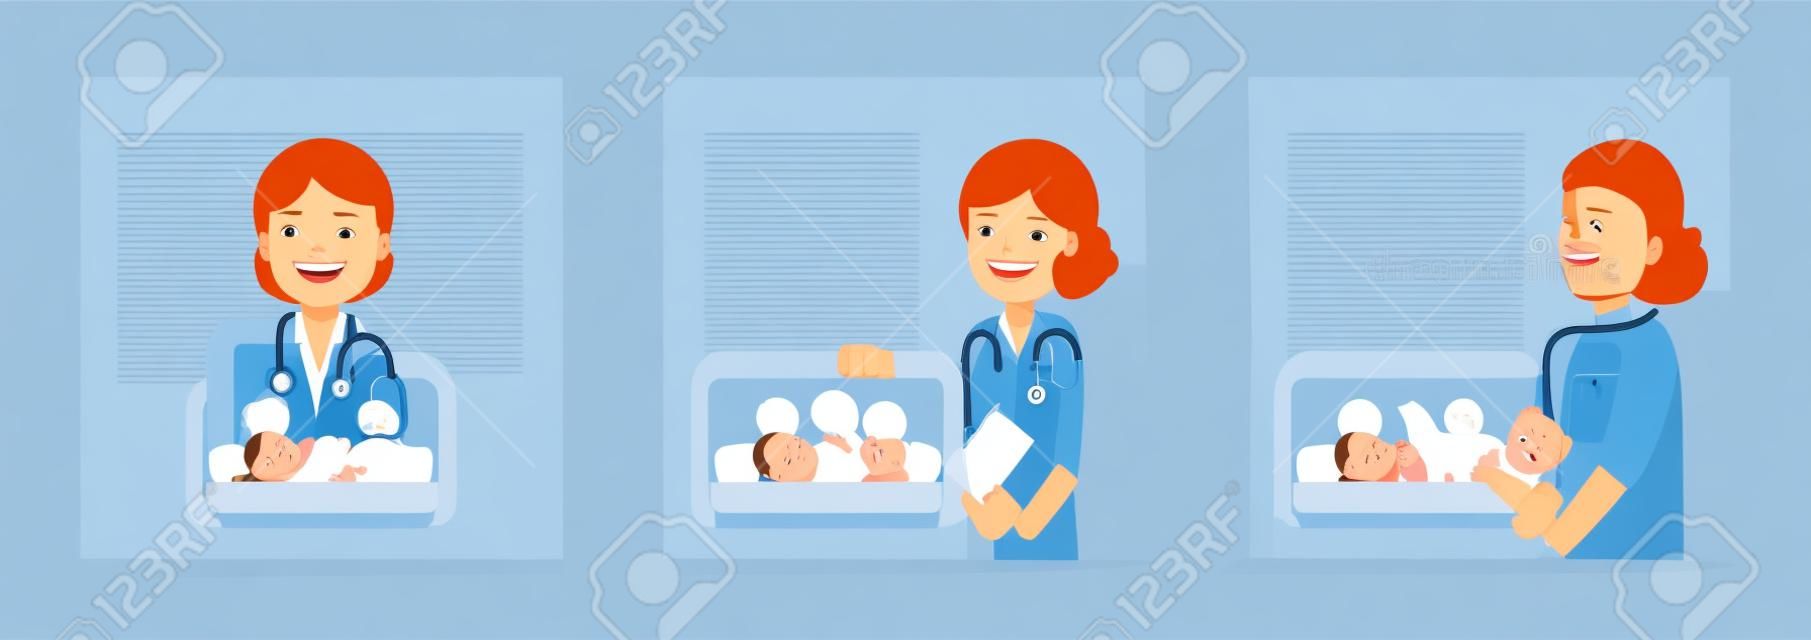 Doctor with newborn baby in incubator flat design vector illustration